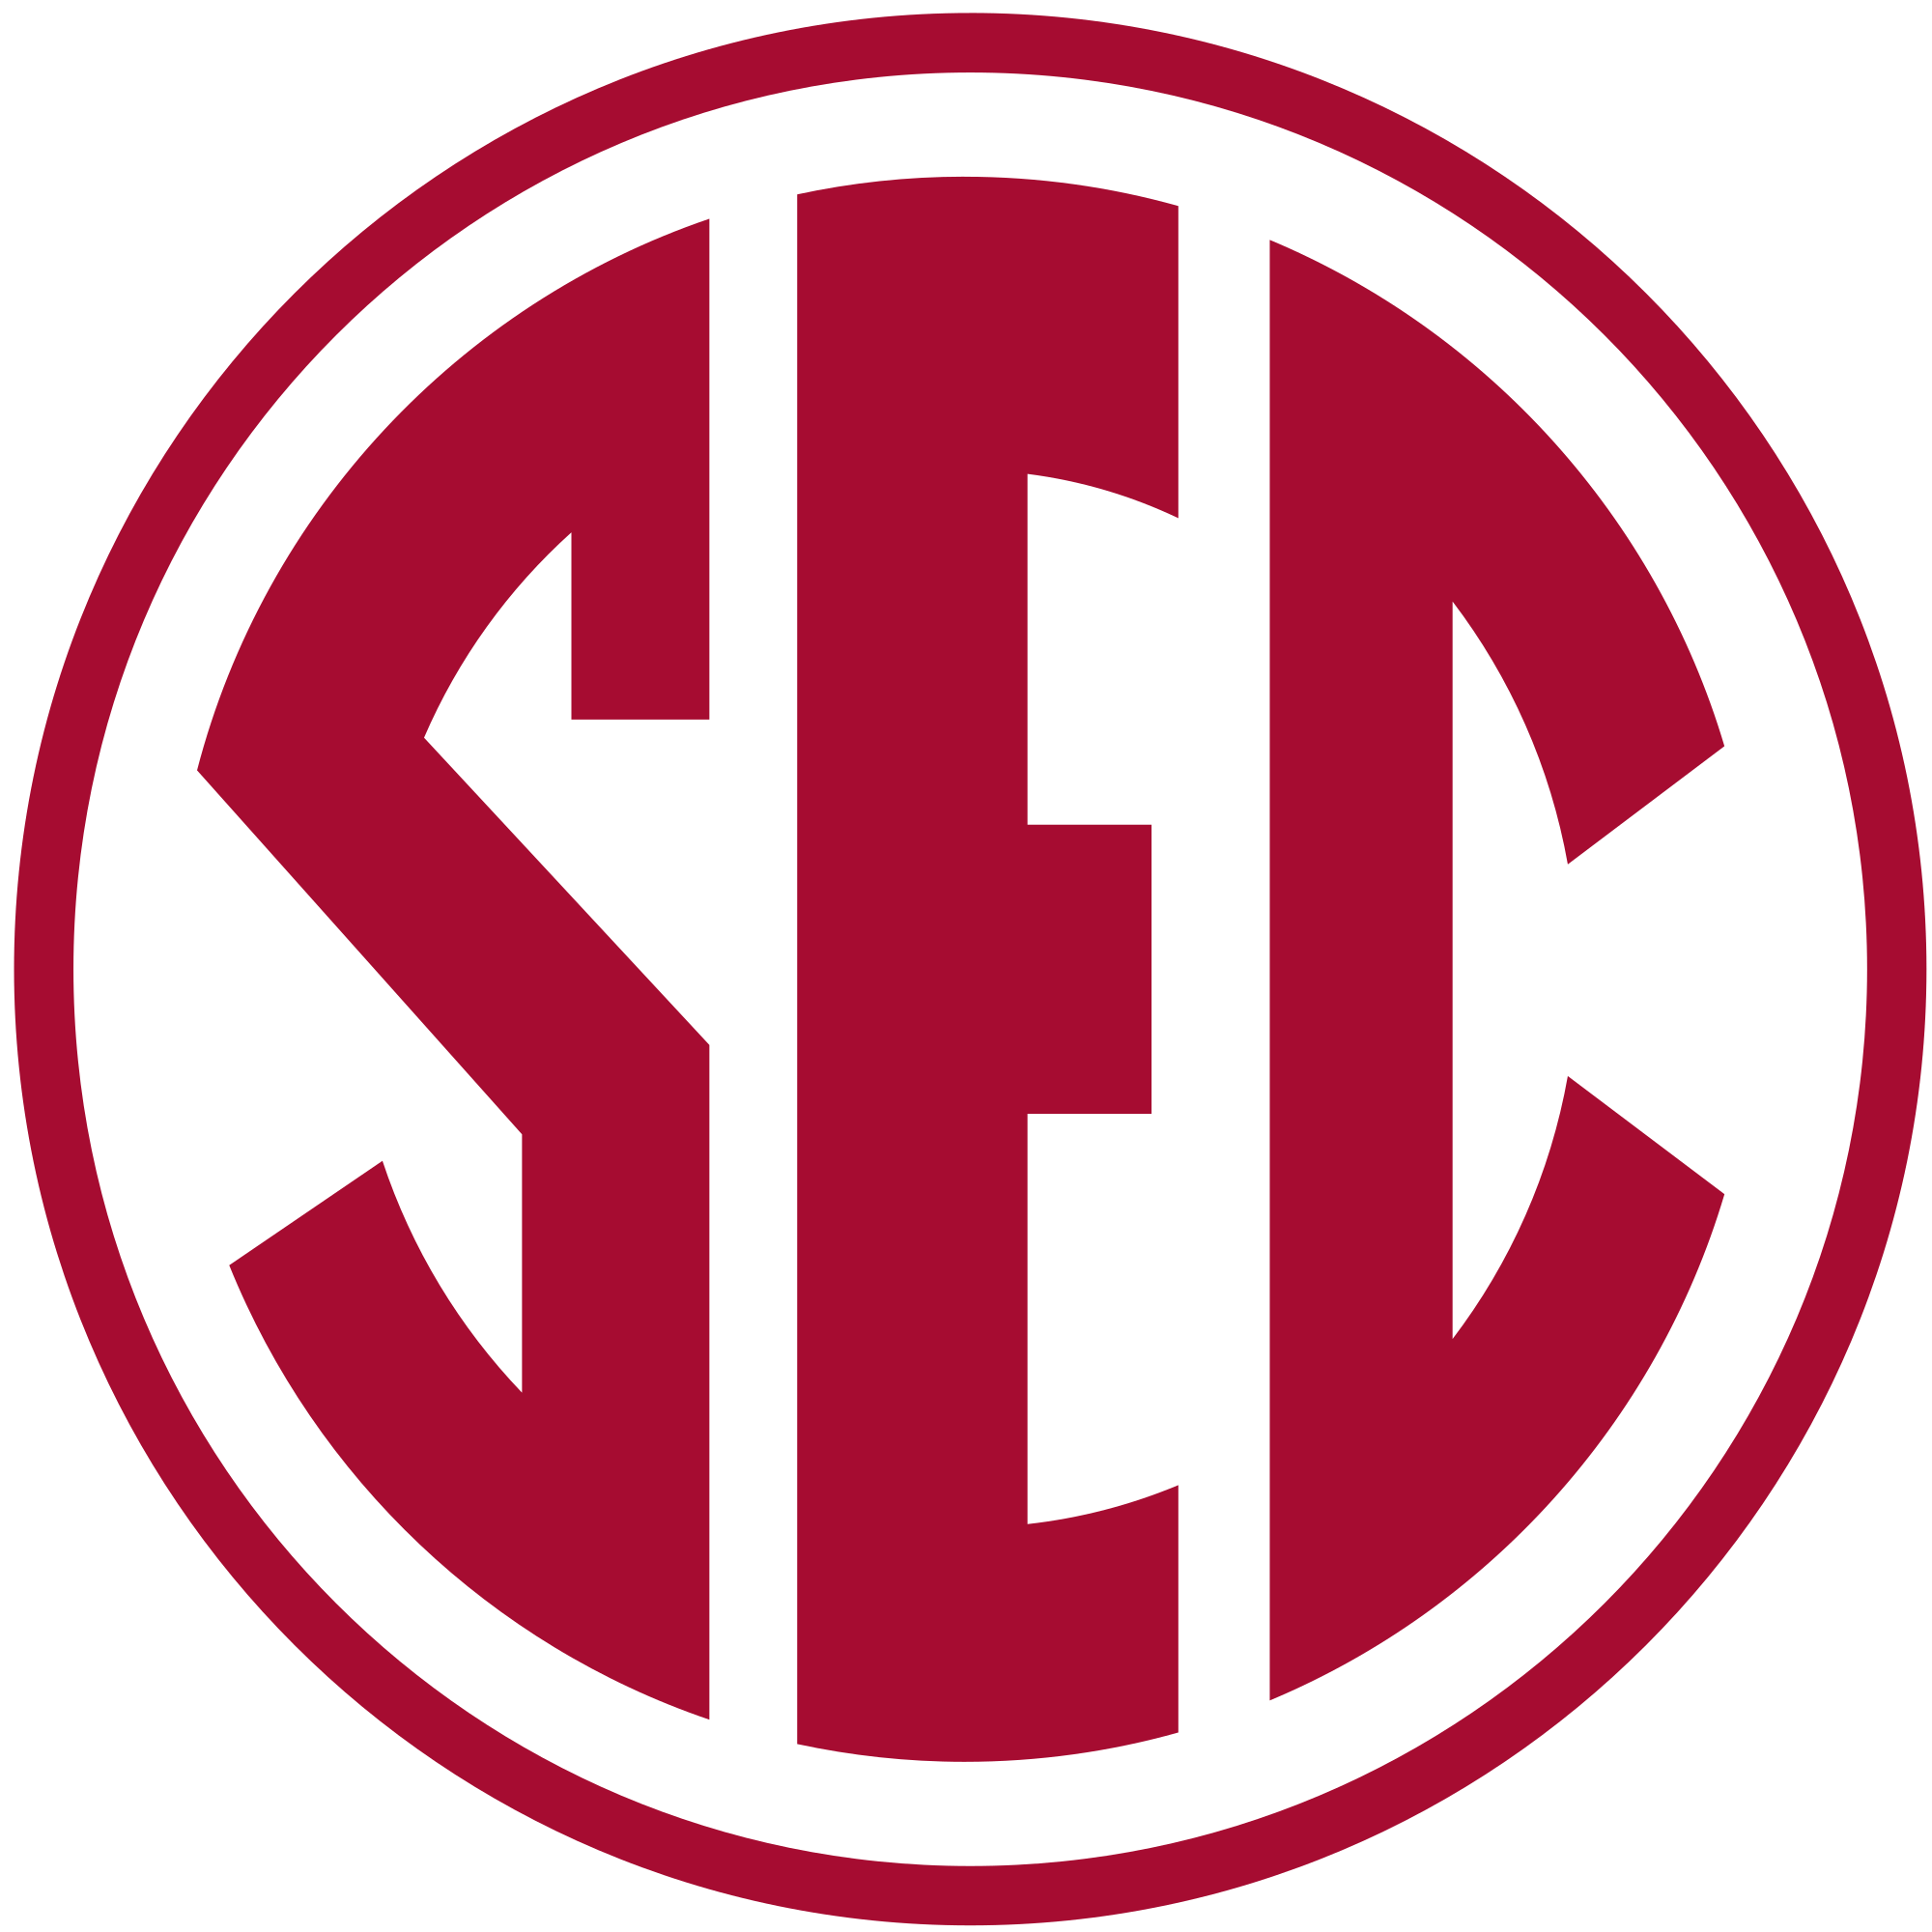 SEC Logo - File:SEC logo in Alabama colors.svg - Wikimedia Commons